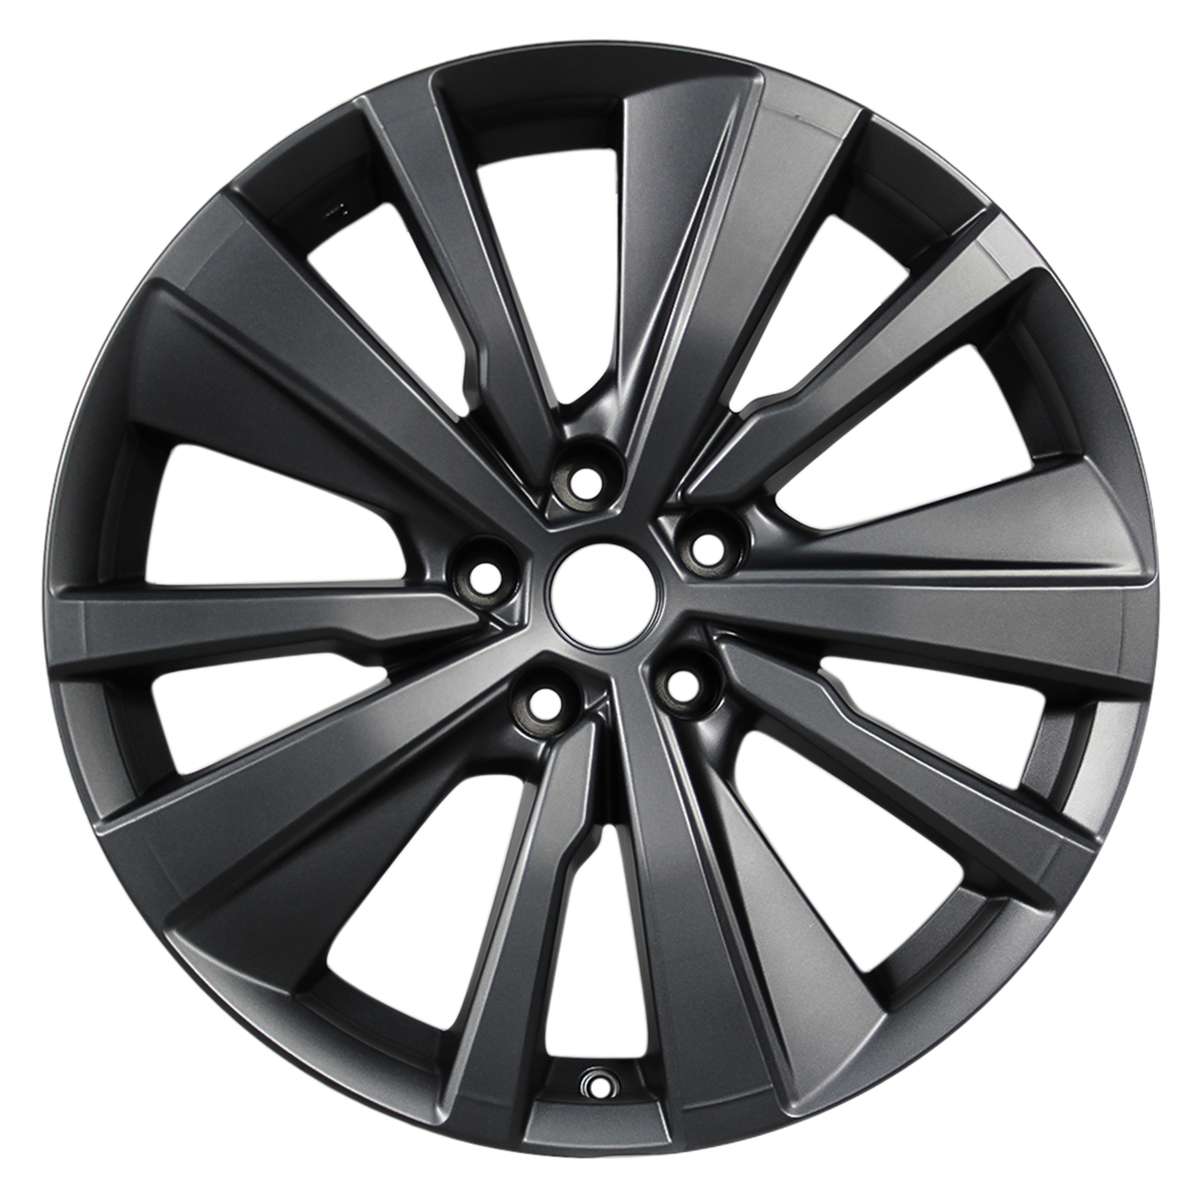 2019 Nissan Altima New 19" Replacement Wheel Rim RW62786C